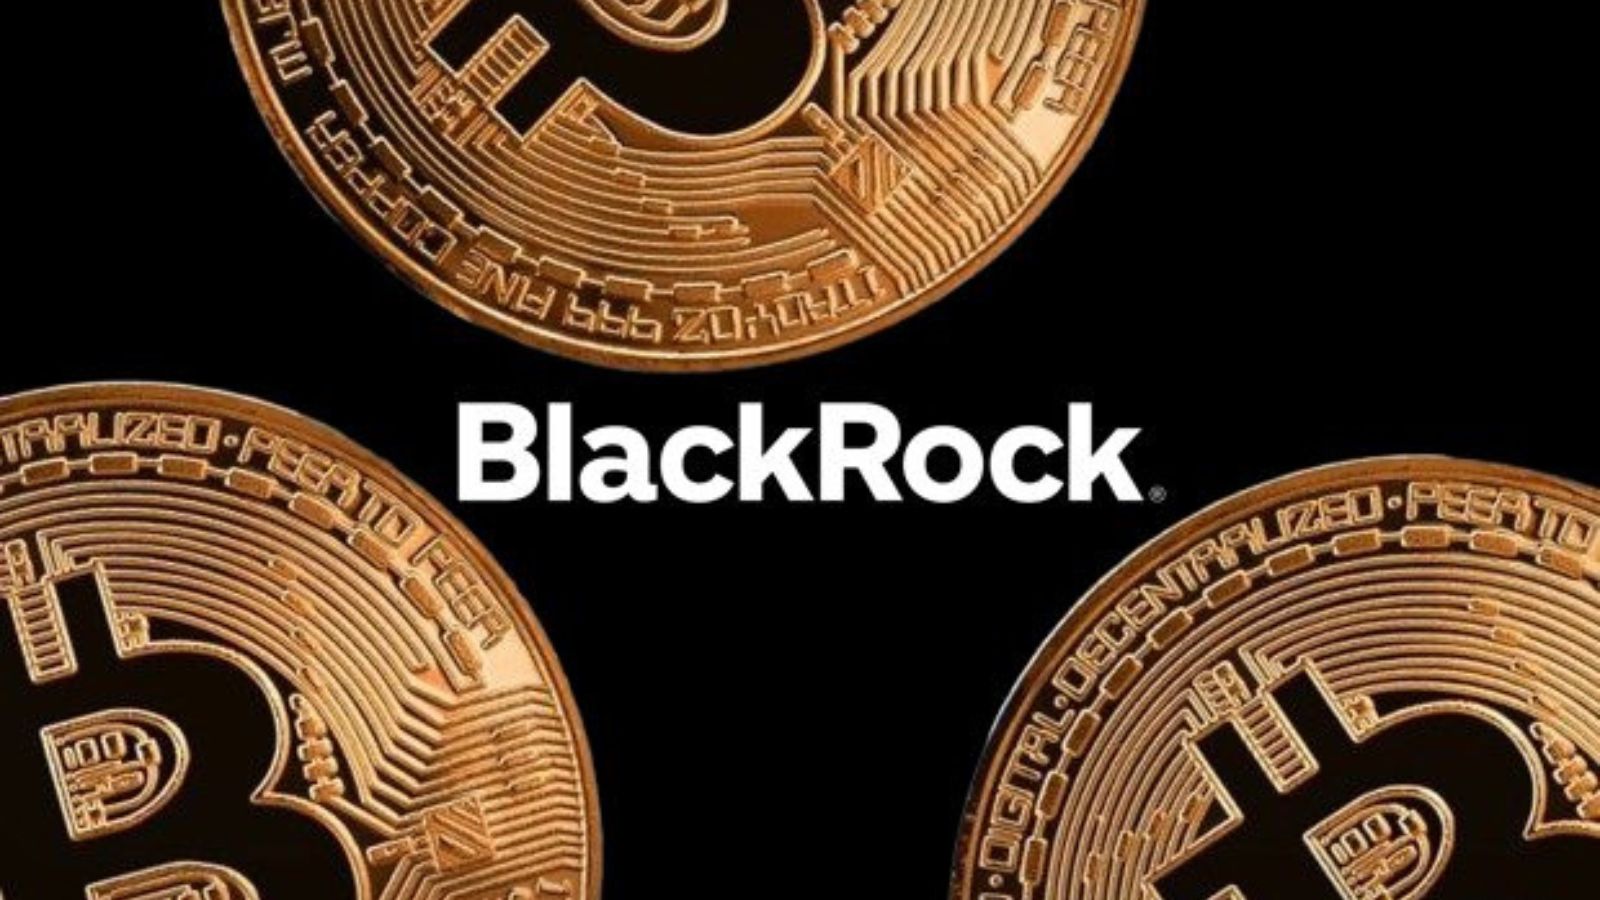 Bitcoin BlackRock